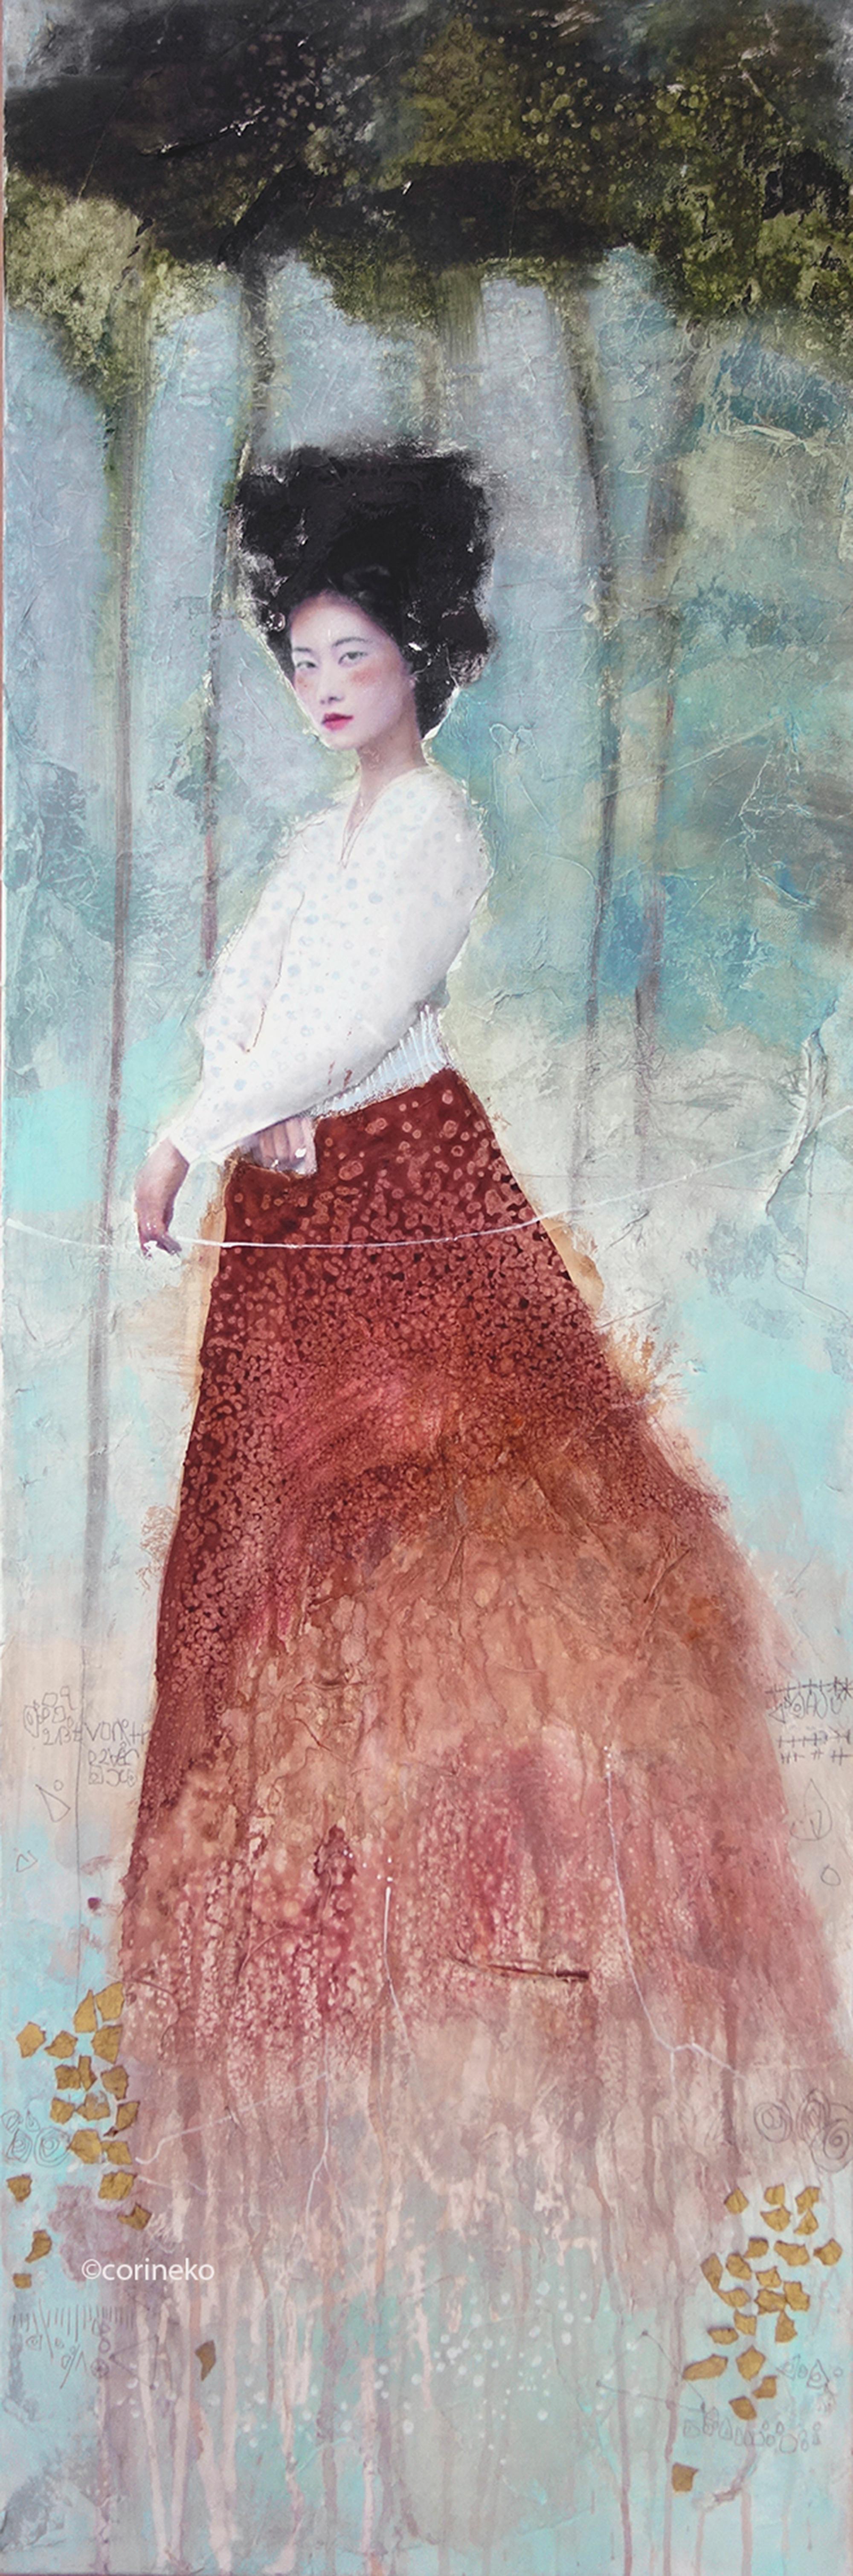 Le Fil Blanc, Horizontal mixed media painting with female figure, Asian beauty - Mixed Media Art by Corine Ko